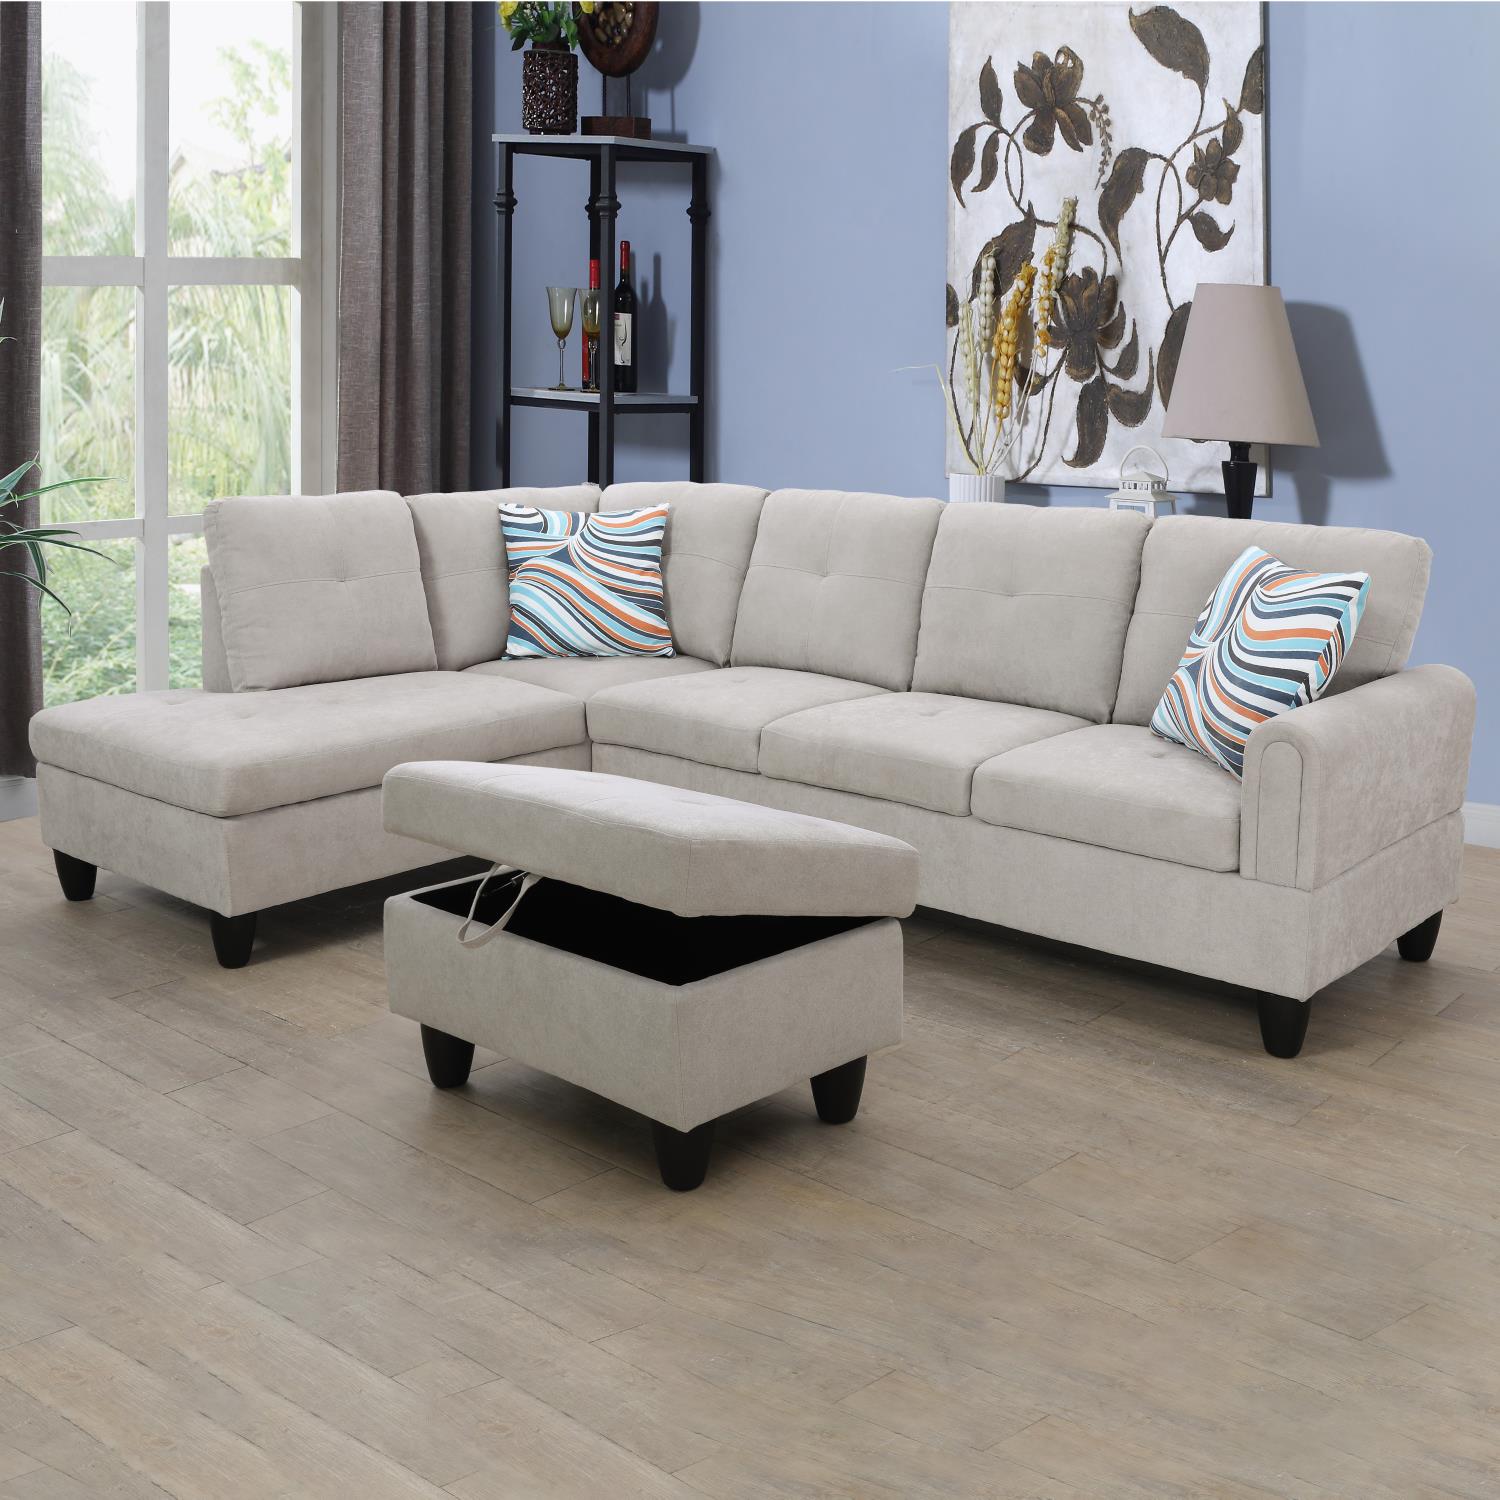 Ainehome White Grey L-Shaped Flannelette Sofa Set